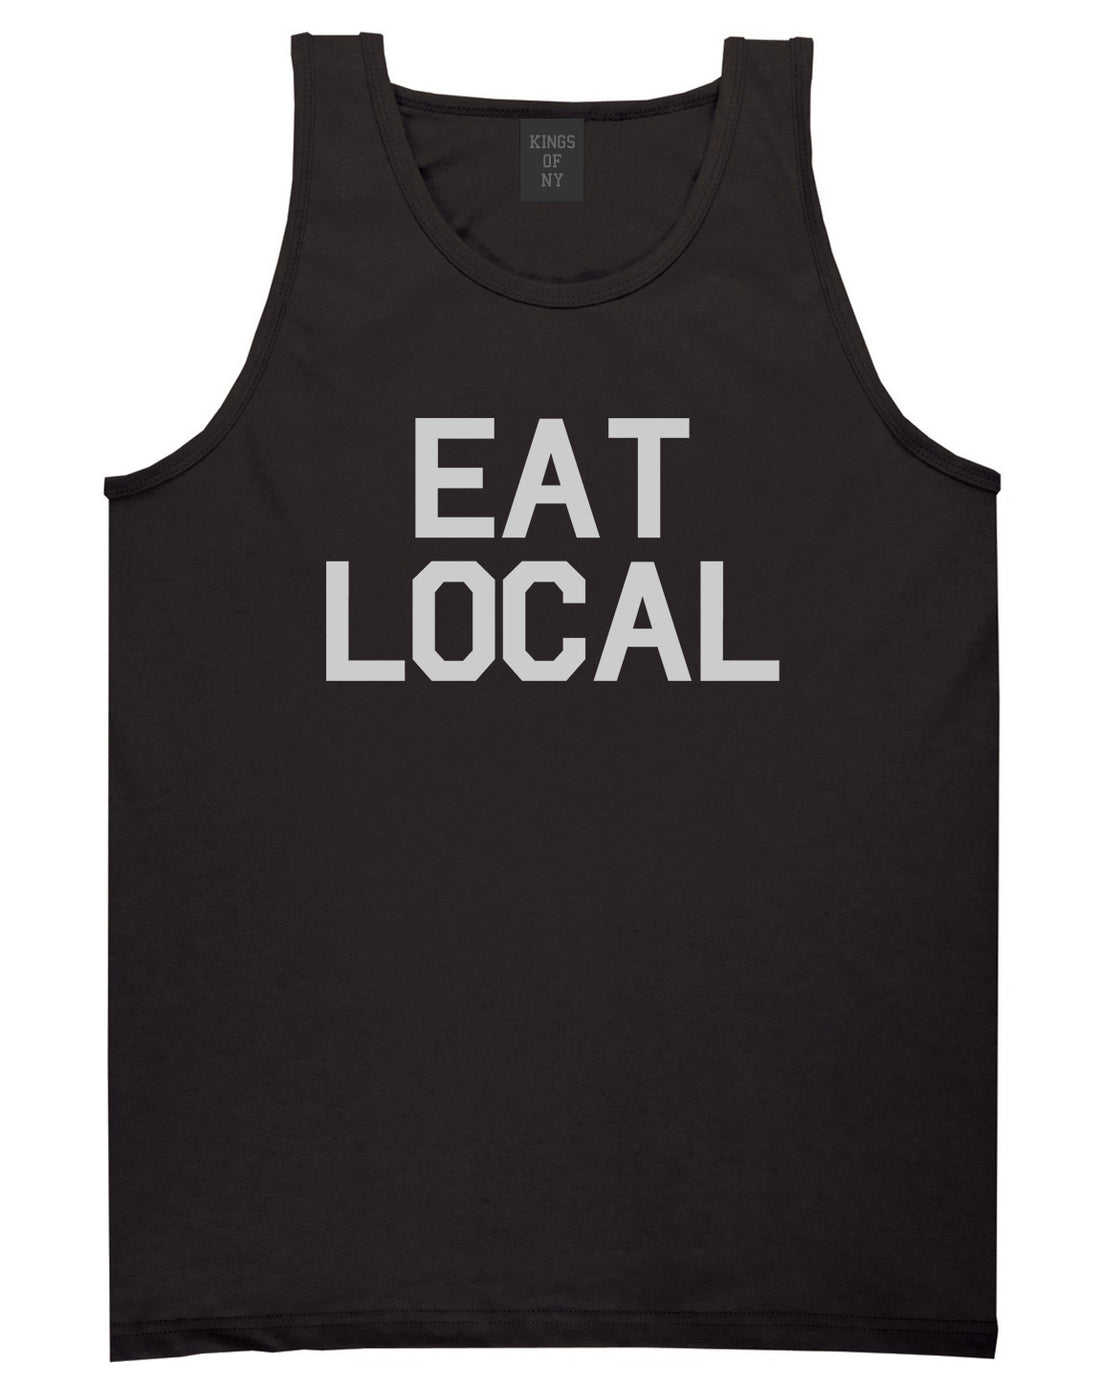 Eat_Local_Buy Mens Black Tank Top Shirt by Kings Of NY